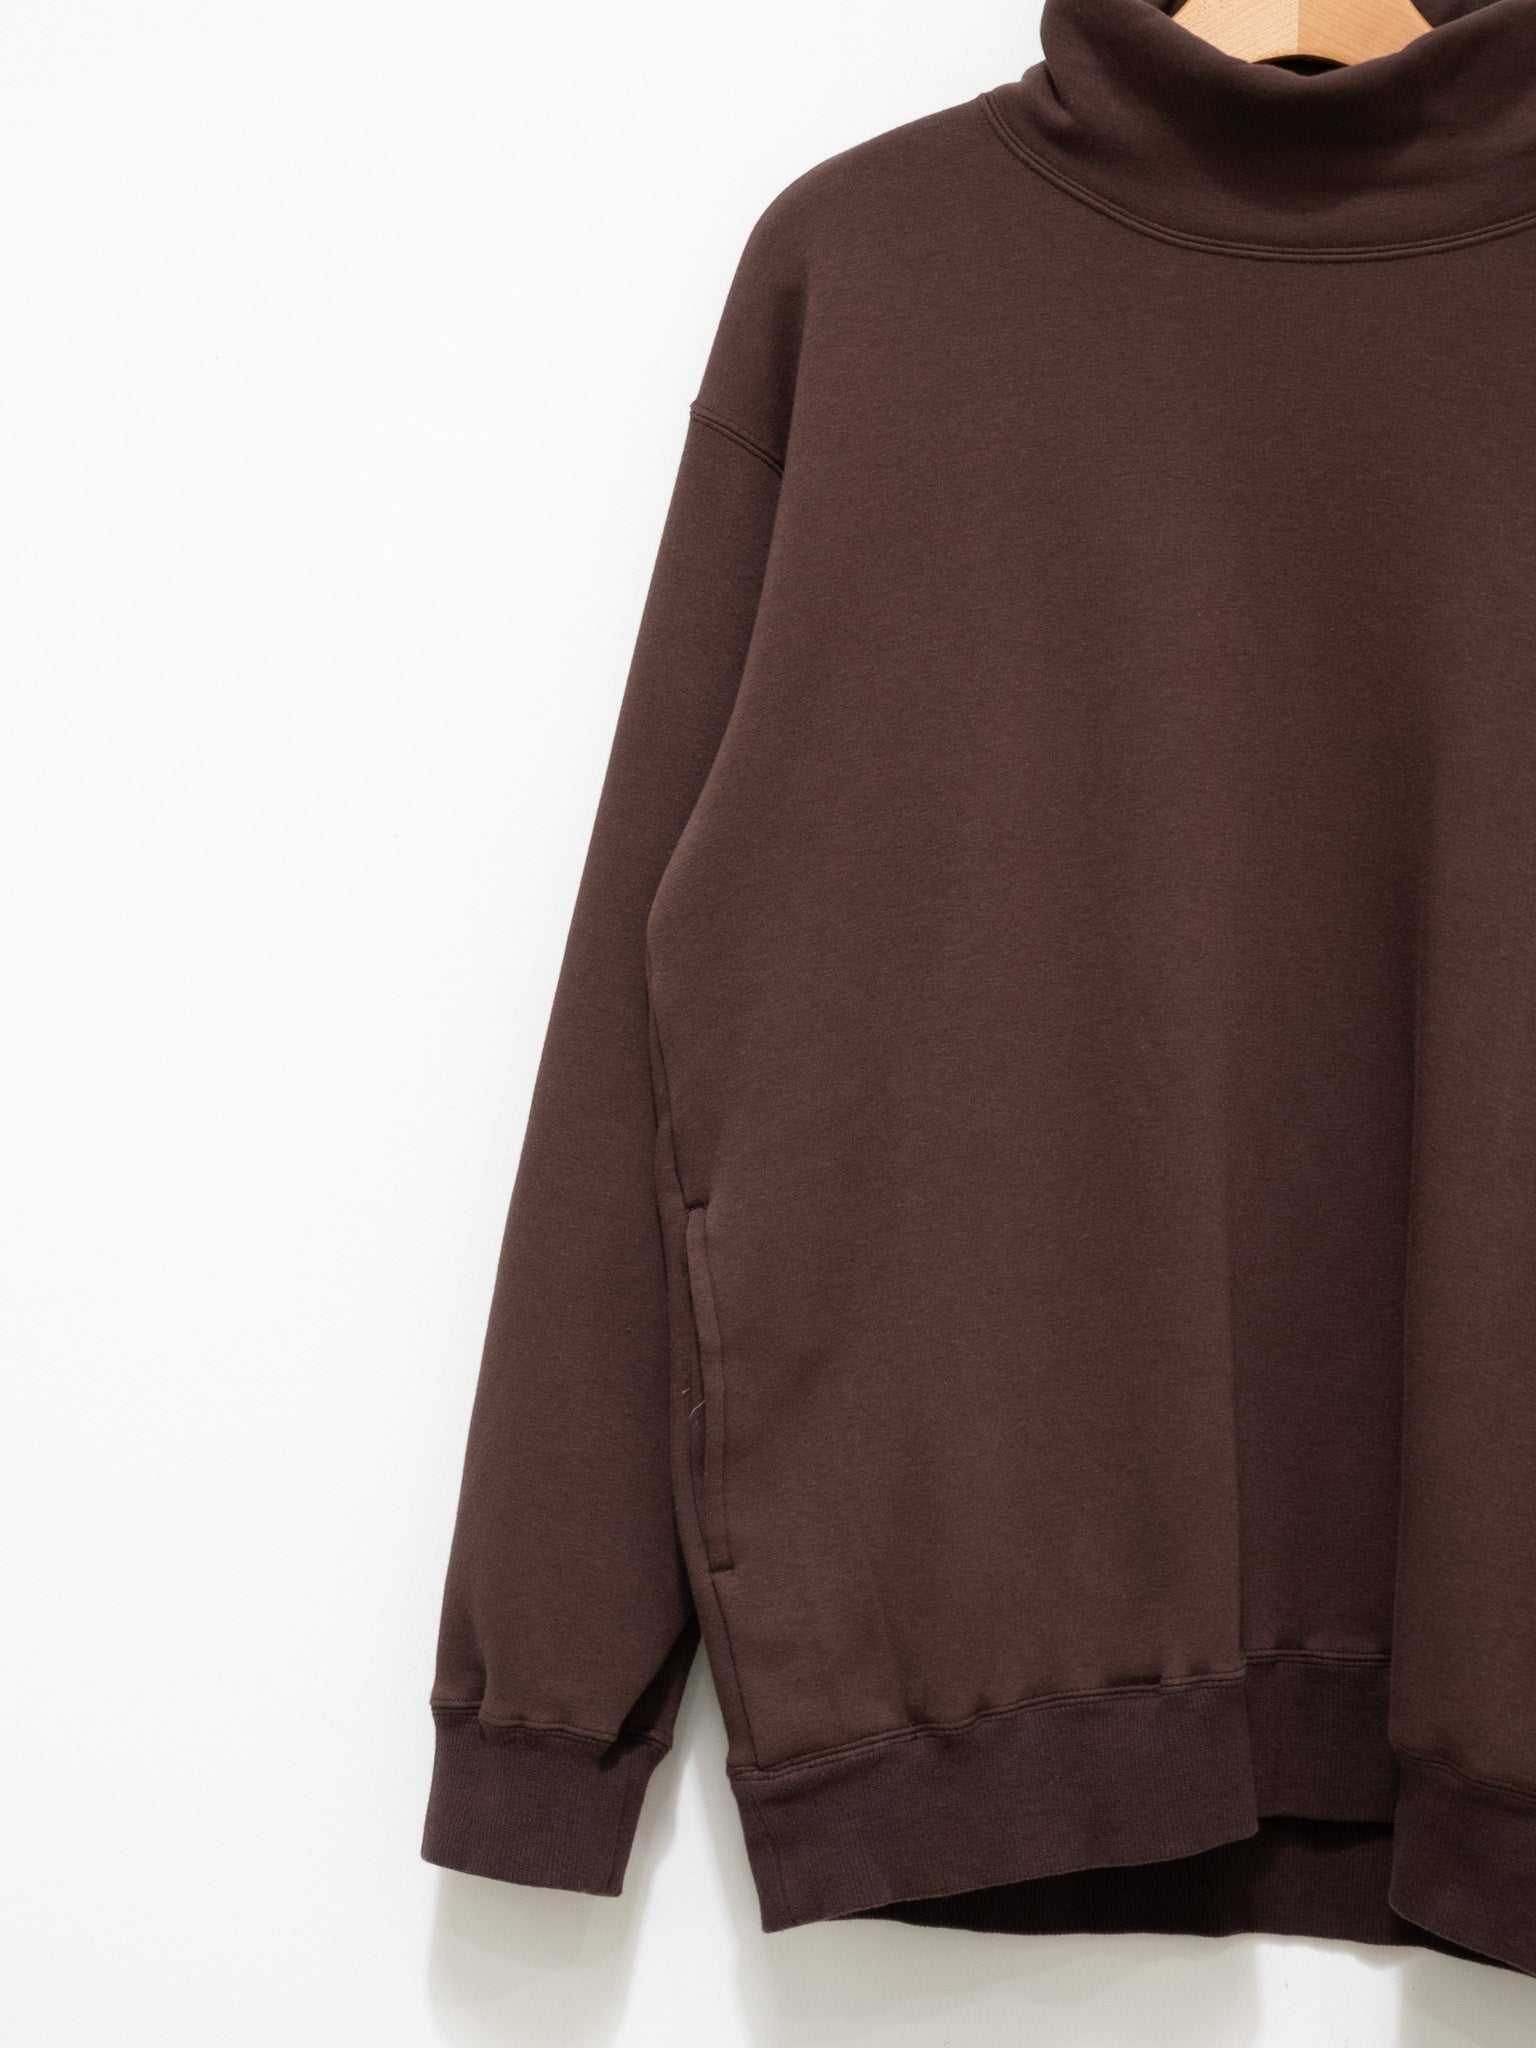 Namu Shop - ts(s) Back Brushed High Neck Sweatshirt - Brown